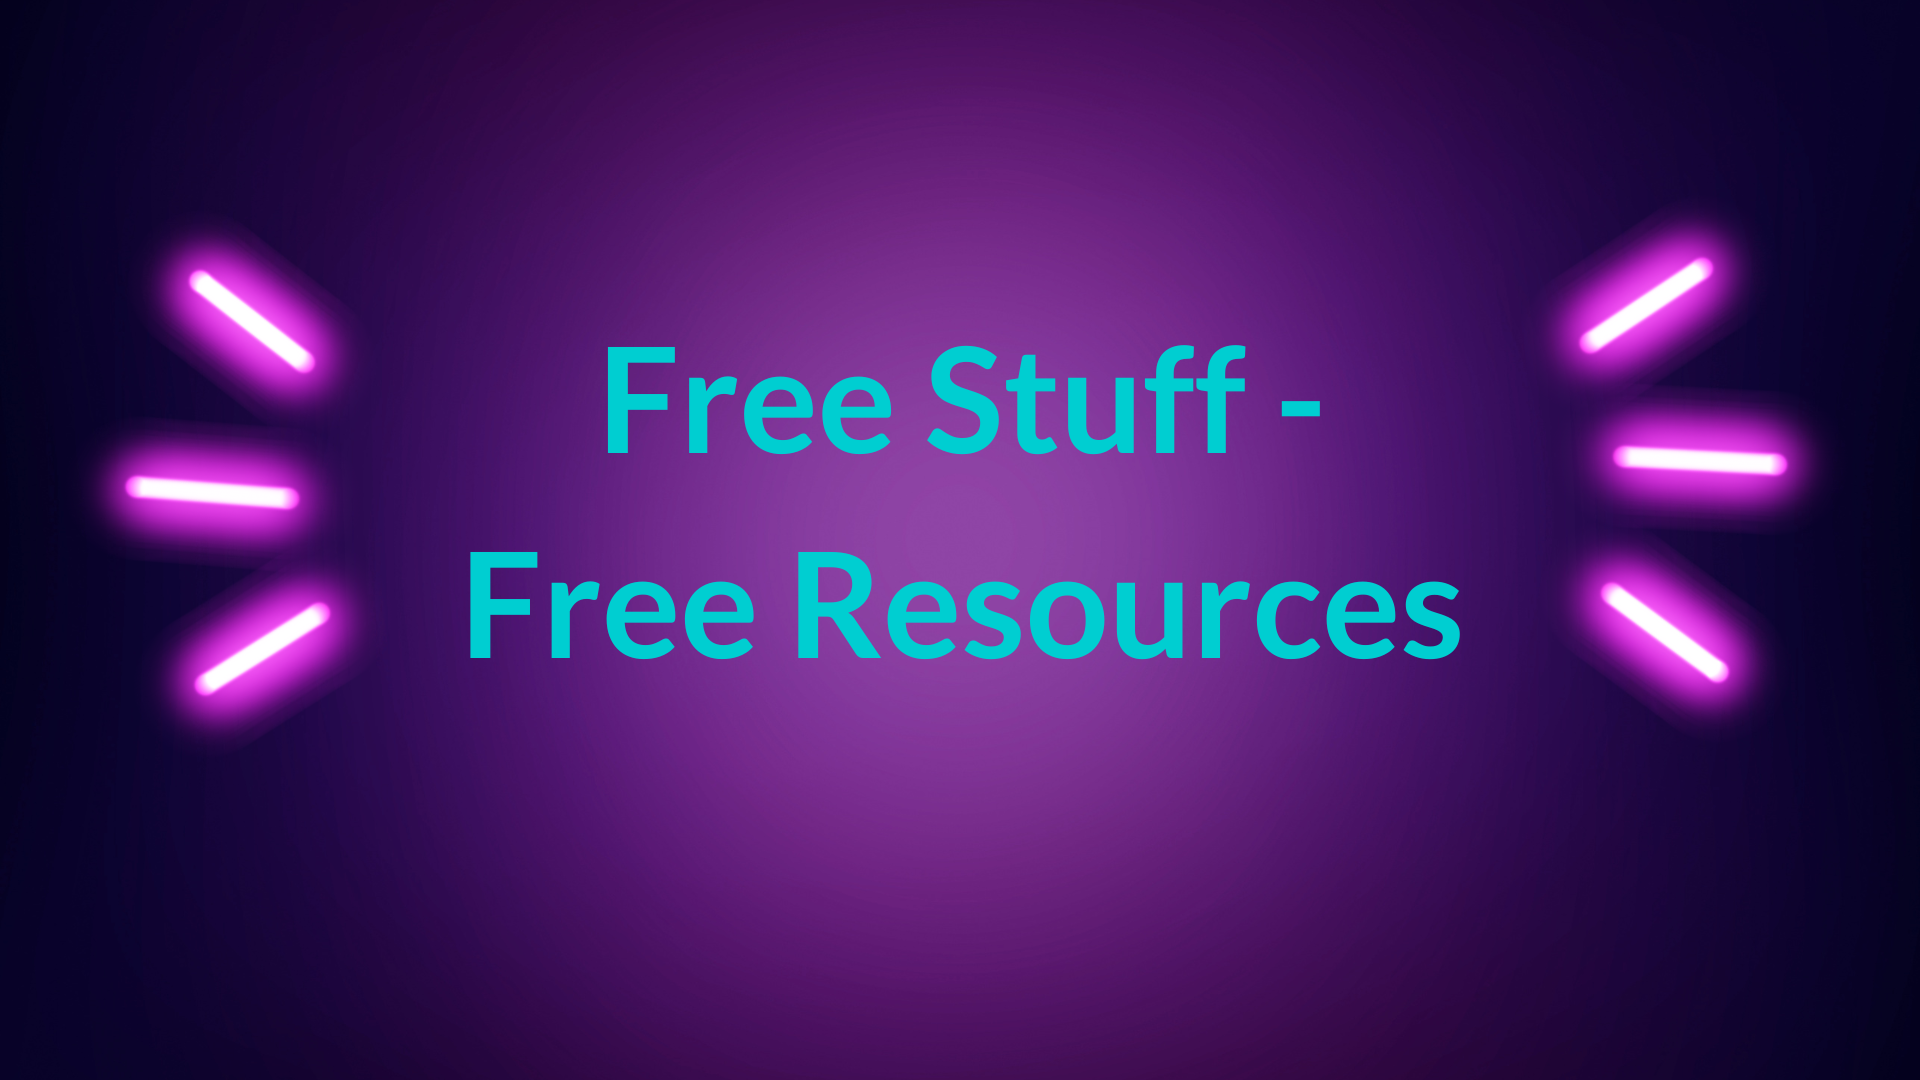 Free Stuff! Free Resources 1920 X 1080